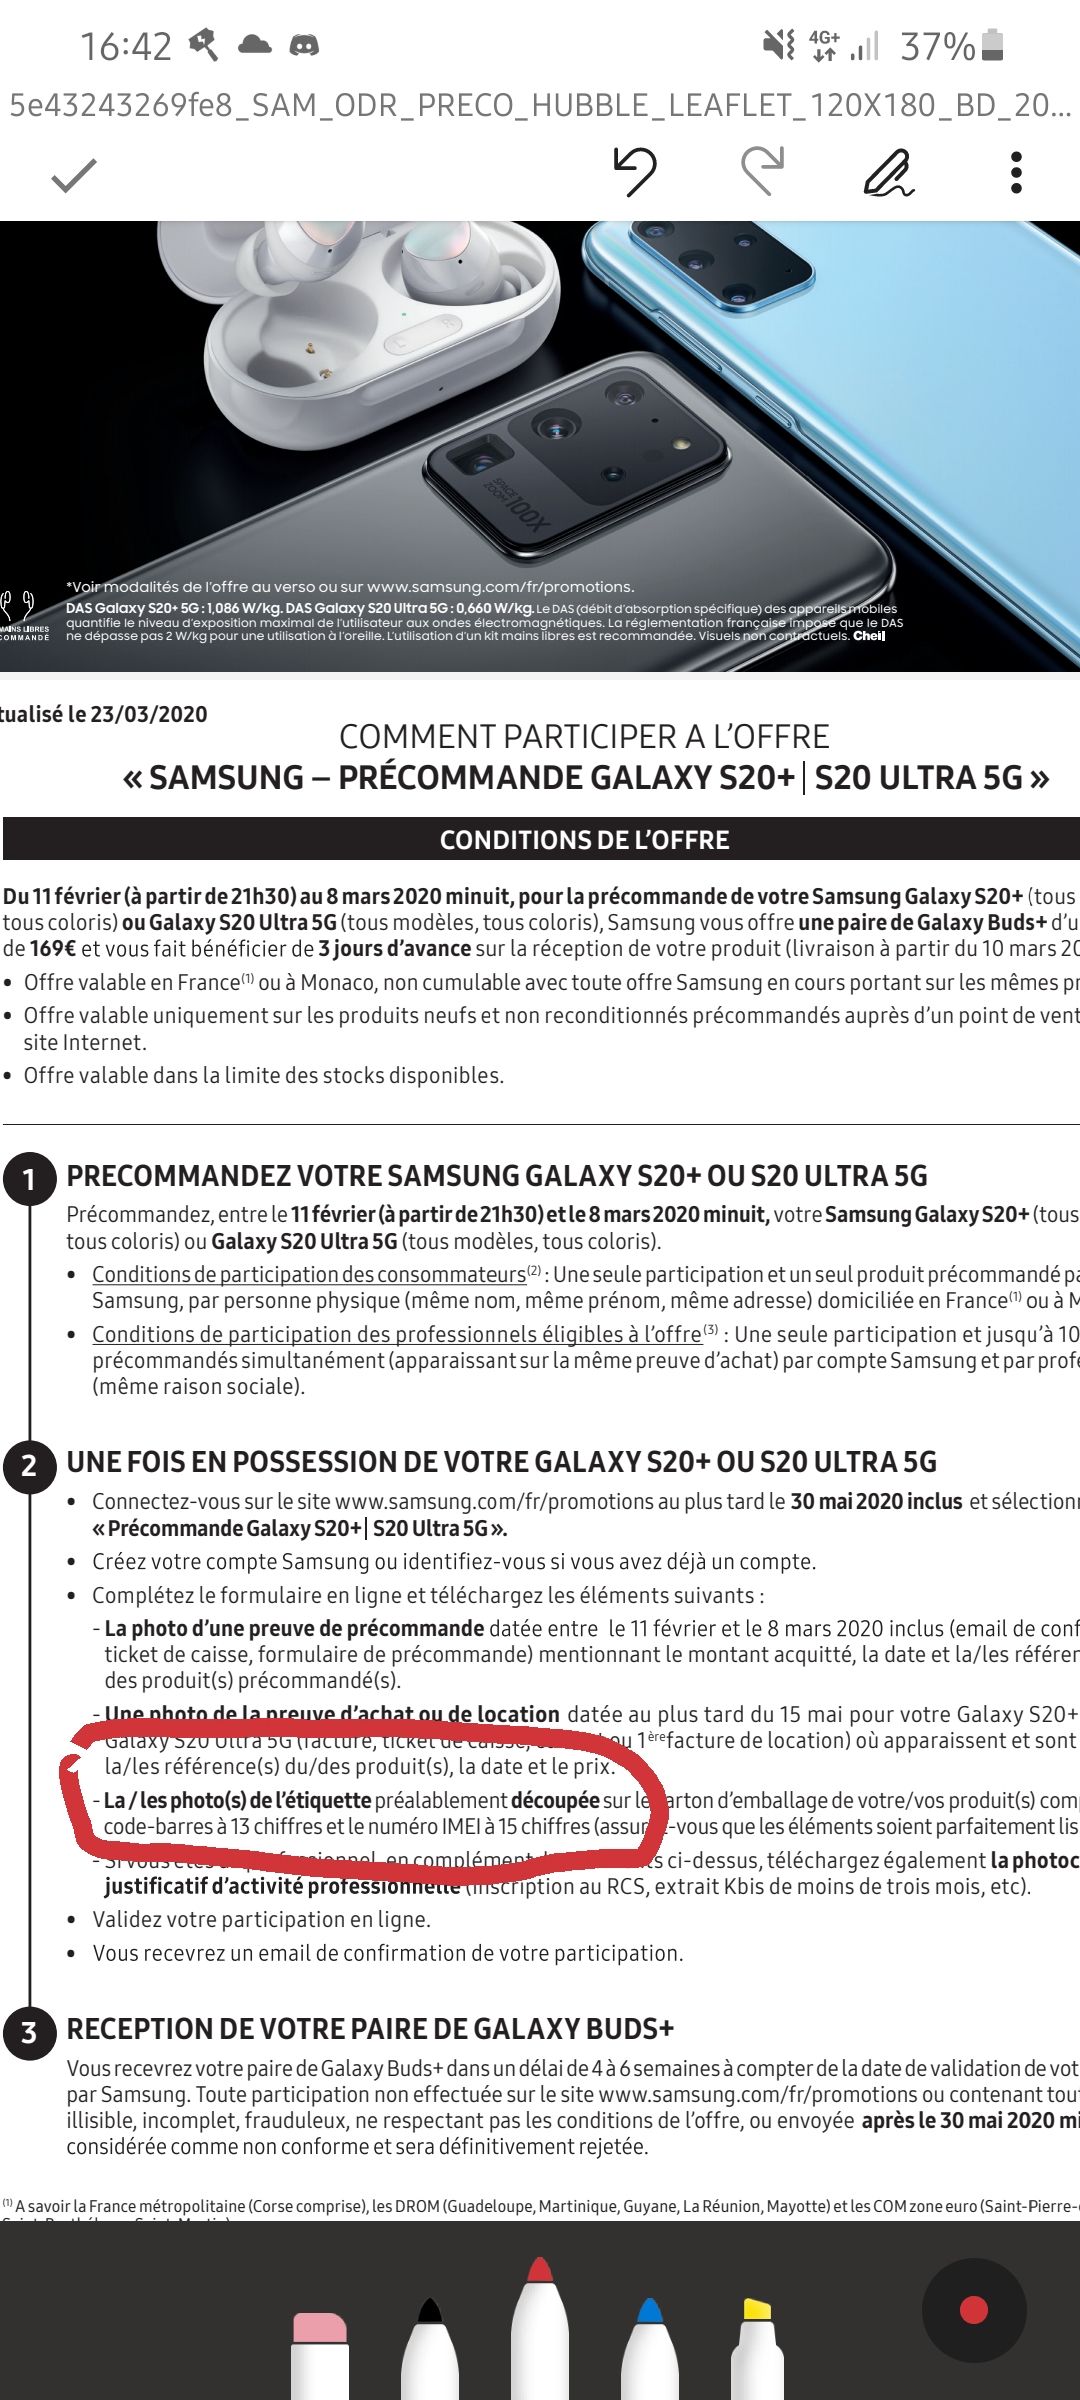 Offre Galaxy buds+ sur précommande Galaxy S20+ - Samsung Community